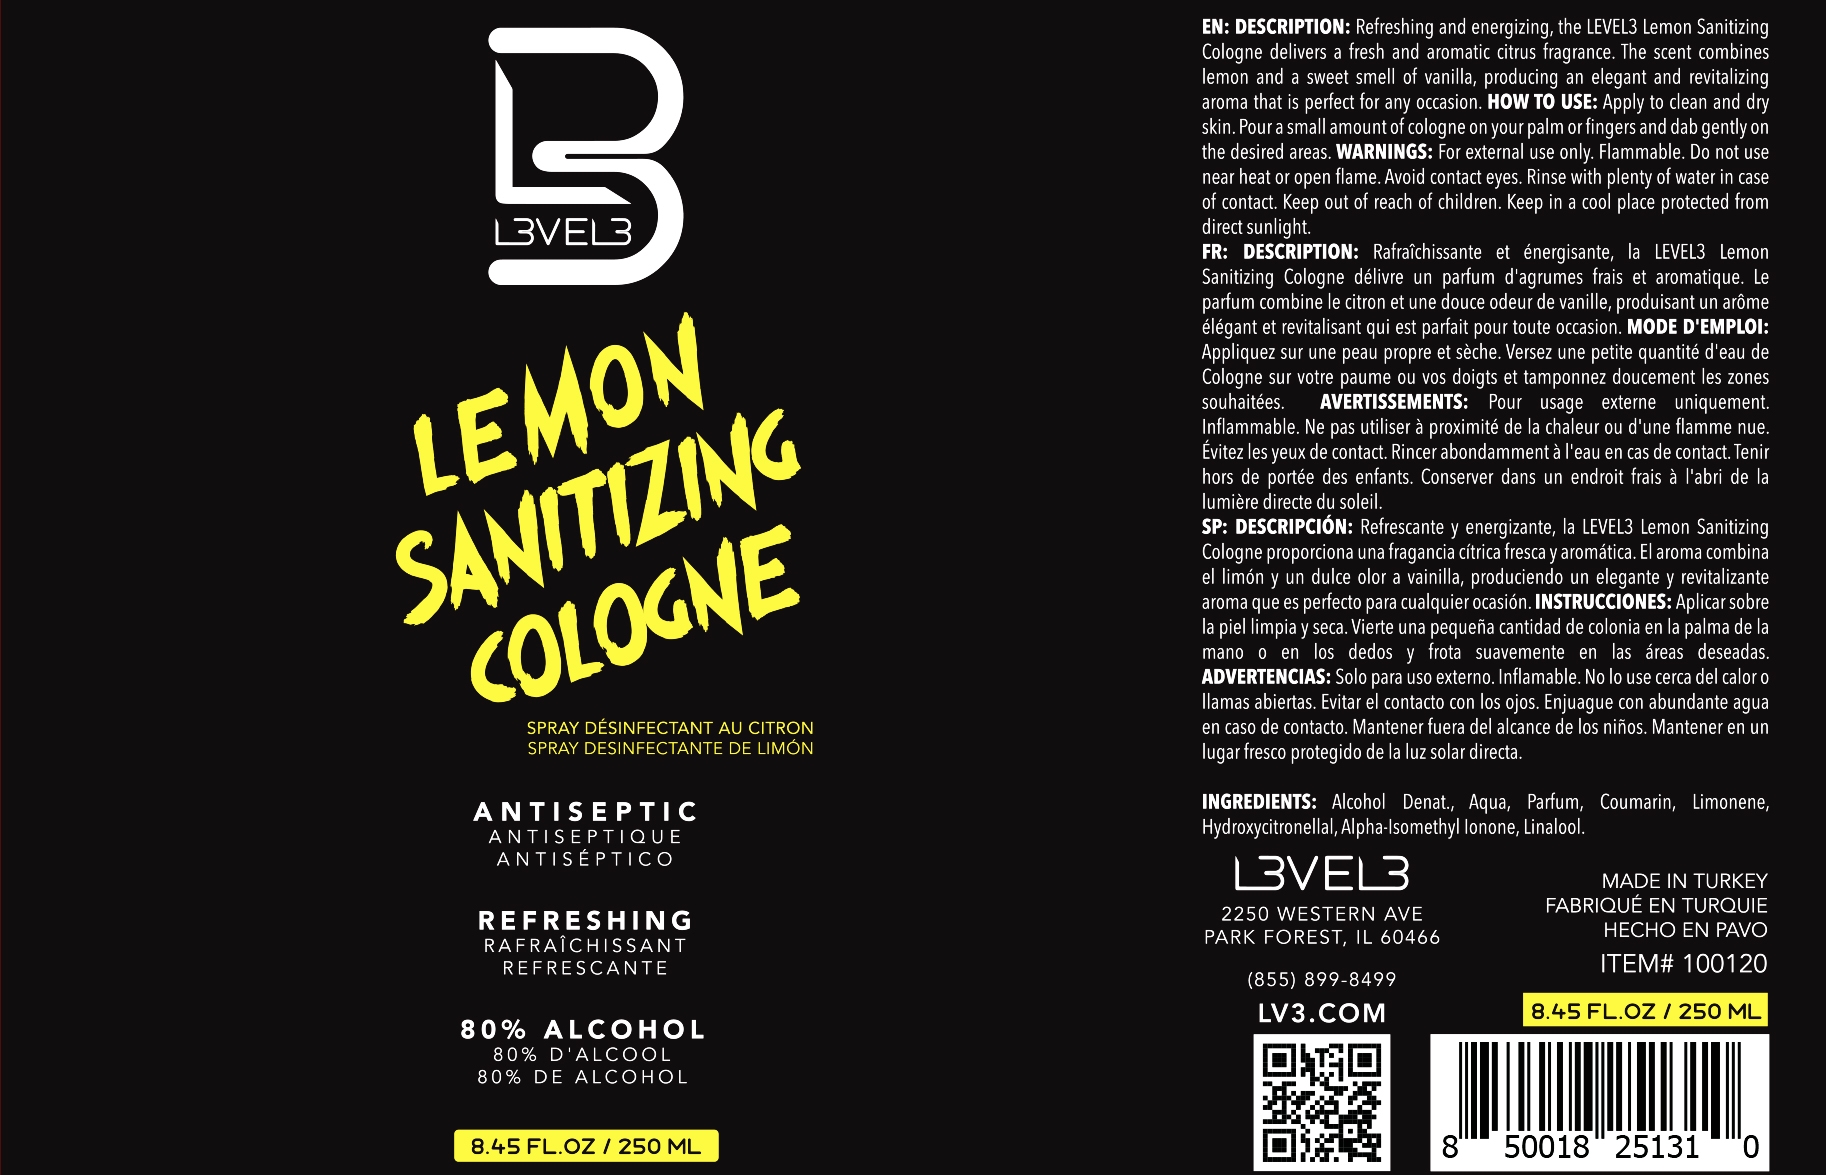 Lemon Sanitizing Cologne 250ml Label